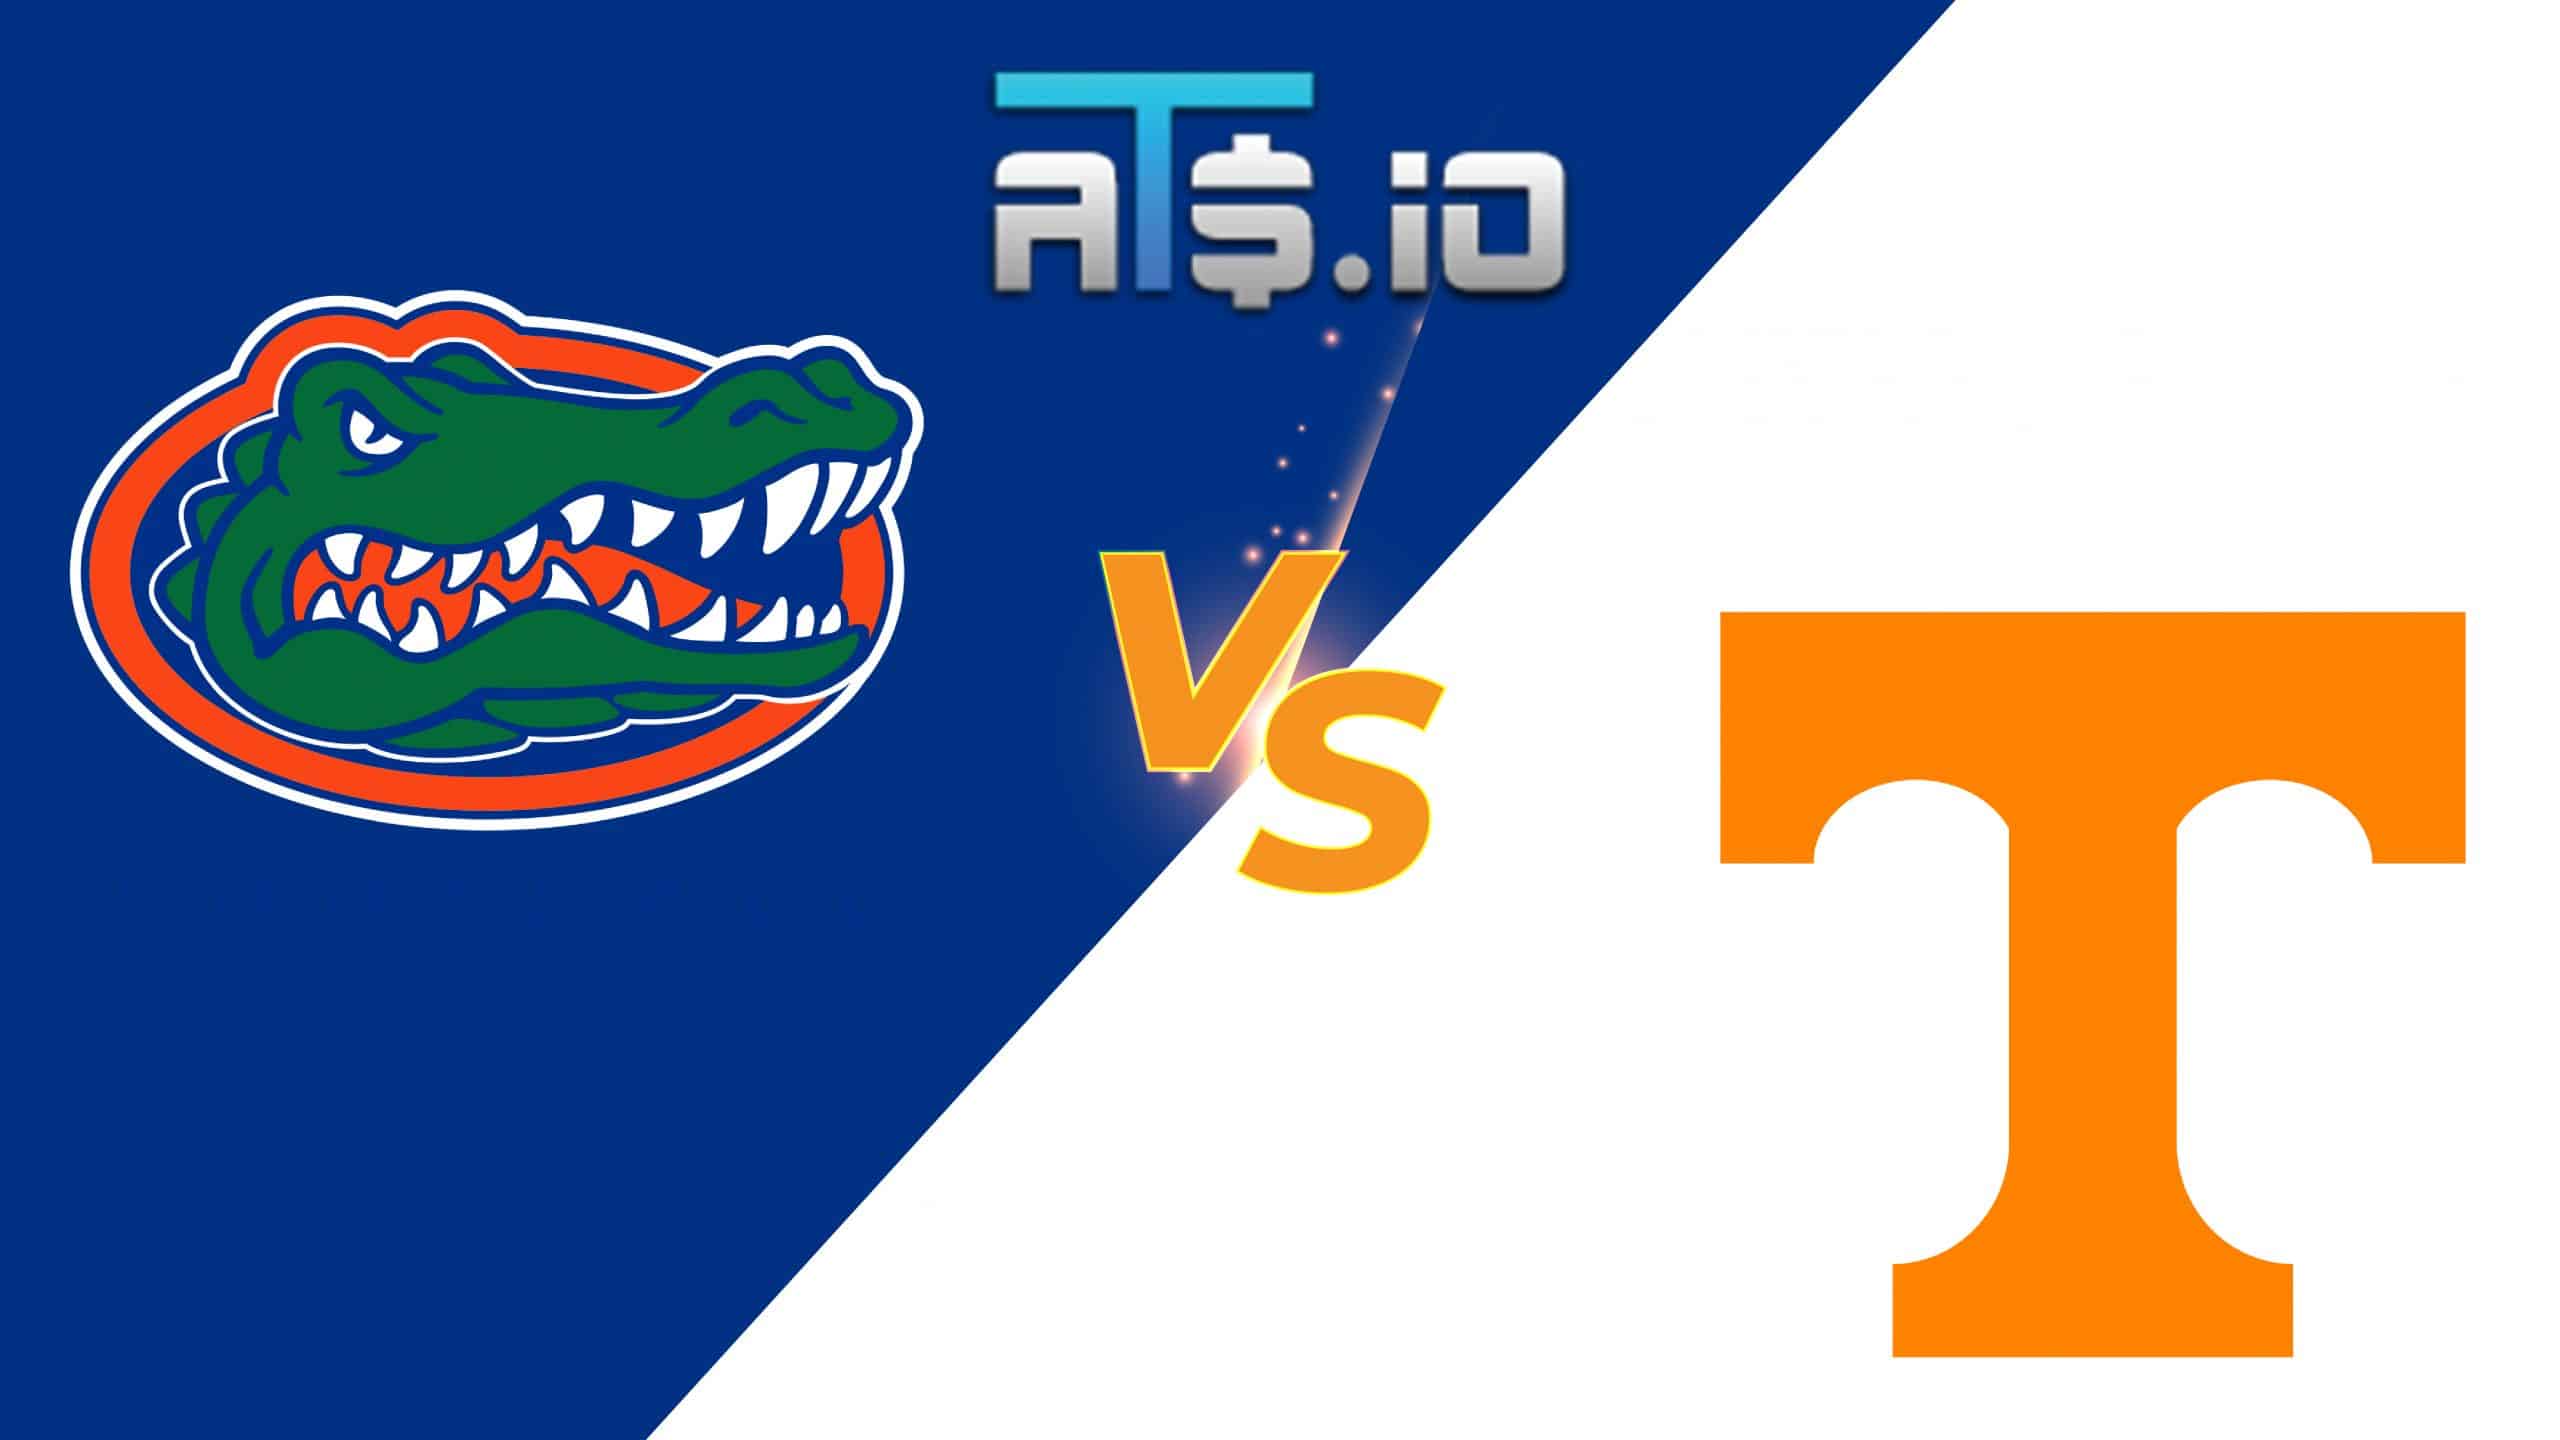 Florida vs Tennessee Betting Pick & Prediction